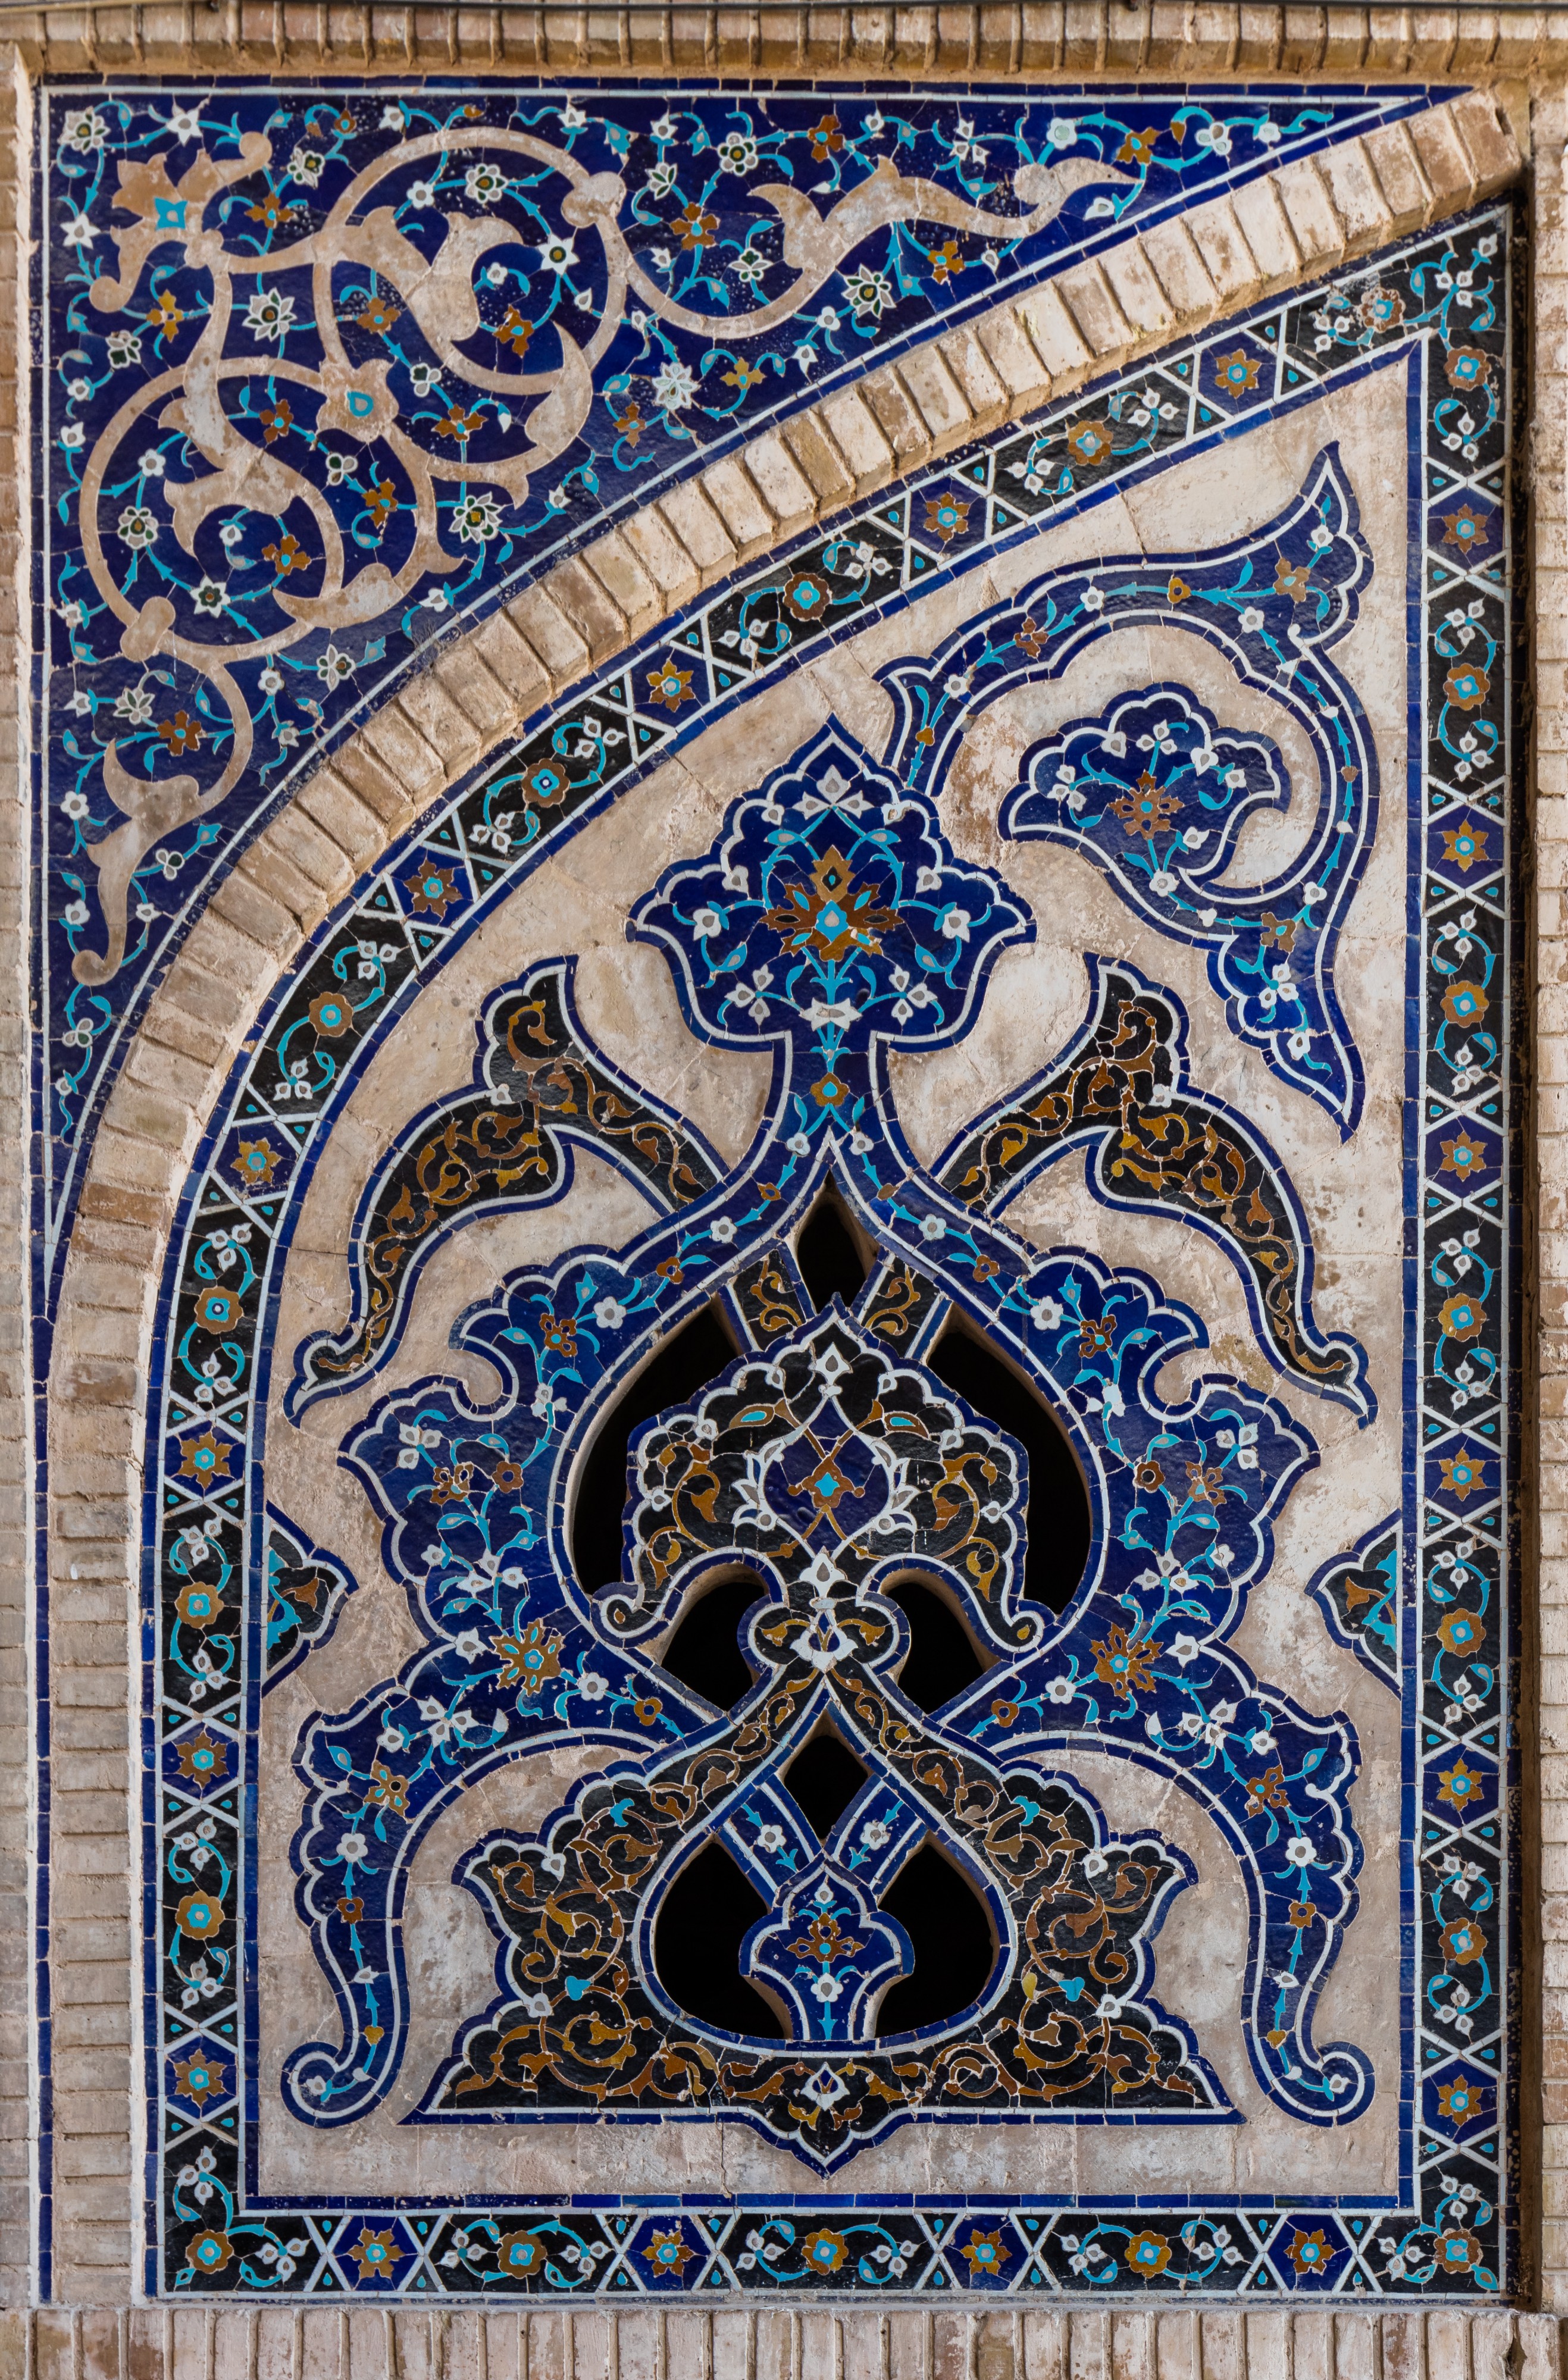 Gran Mezquita de Isfahán, Isfahán, Irán, 2016-09-20, DD 31